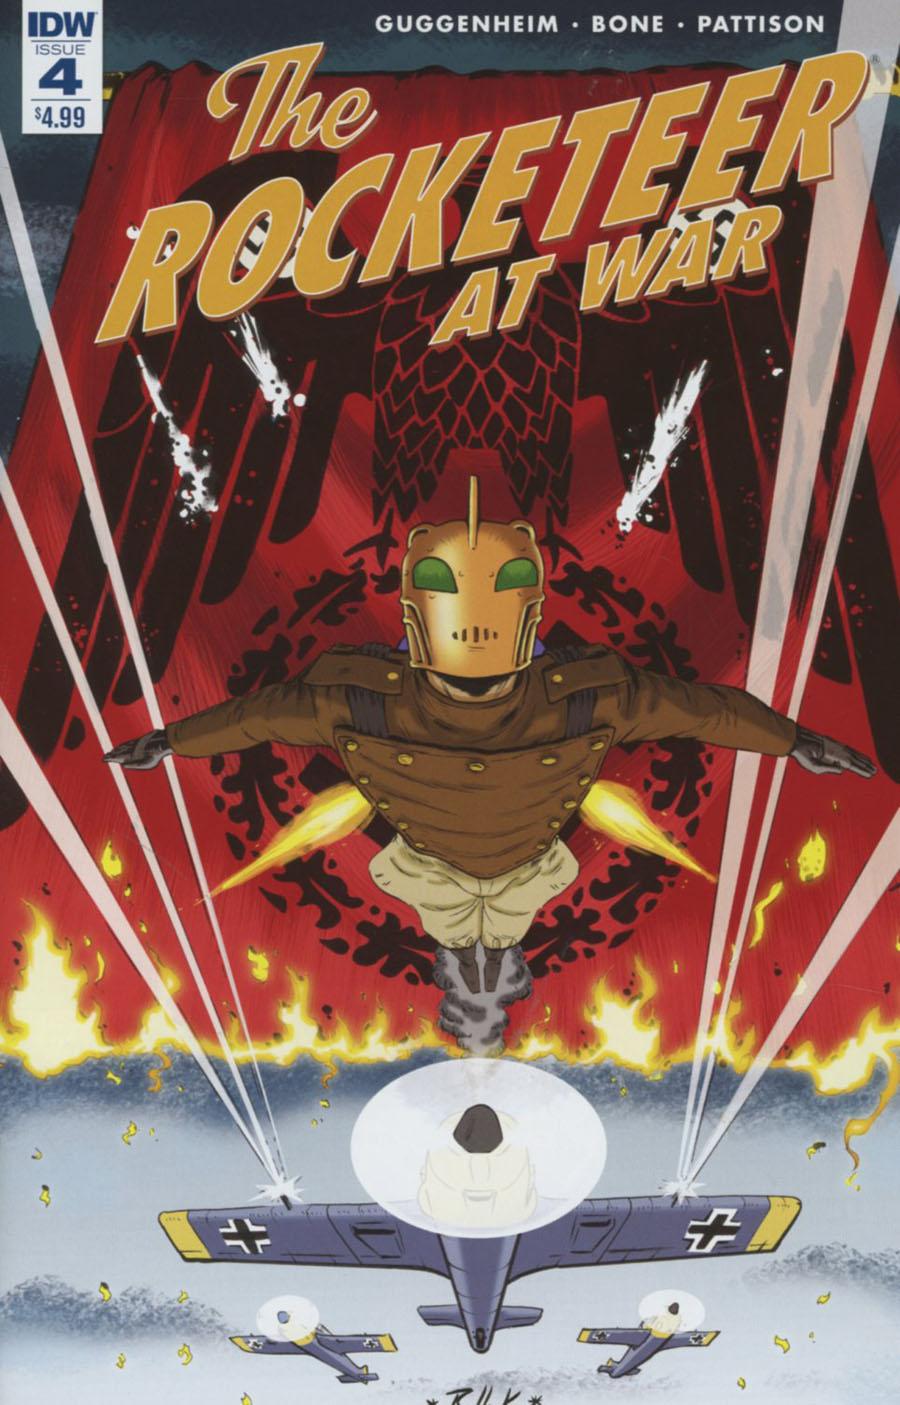 Rocketeer At War Vol. 1 #4